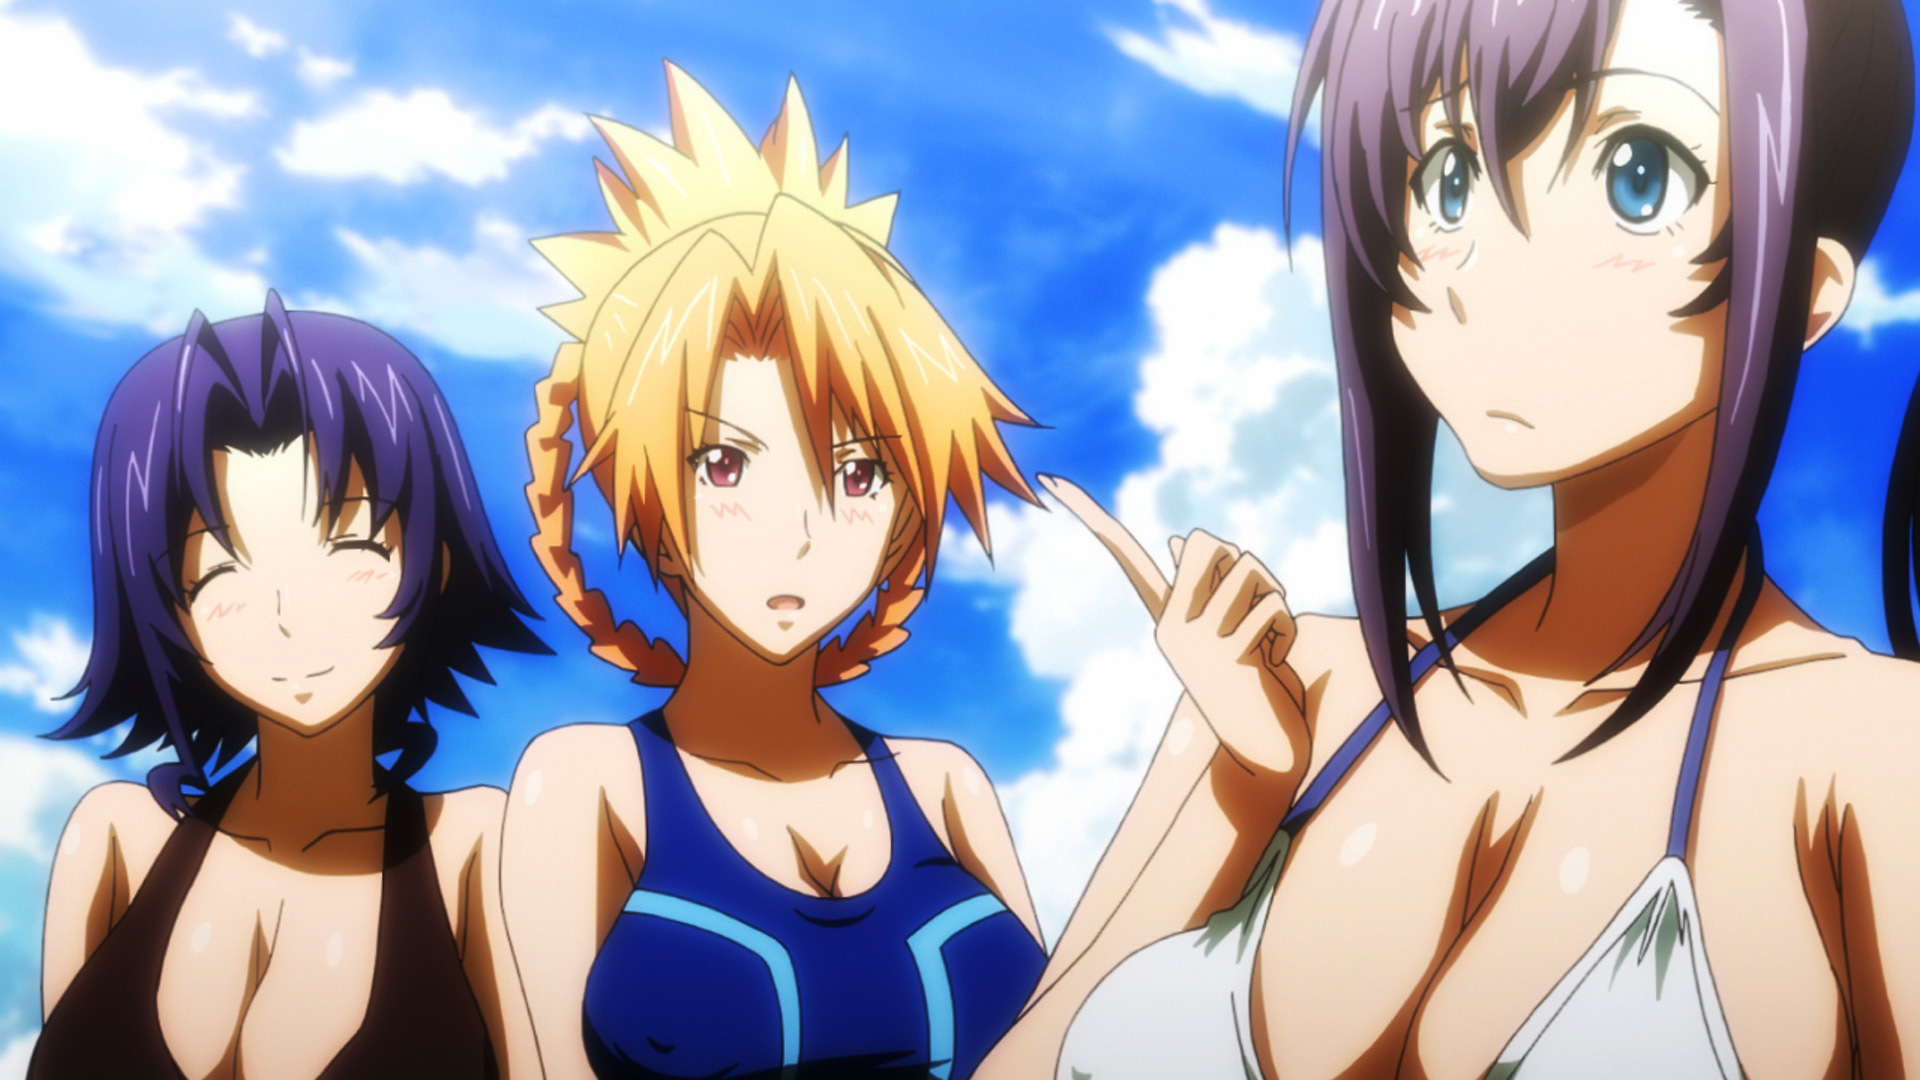 Watch Maken-ki! Season 1 Episode 13 Anime Uncut on Funimation